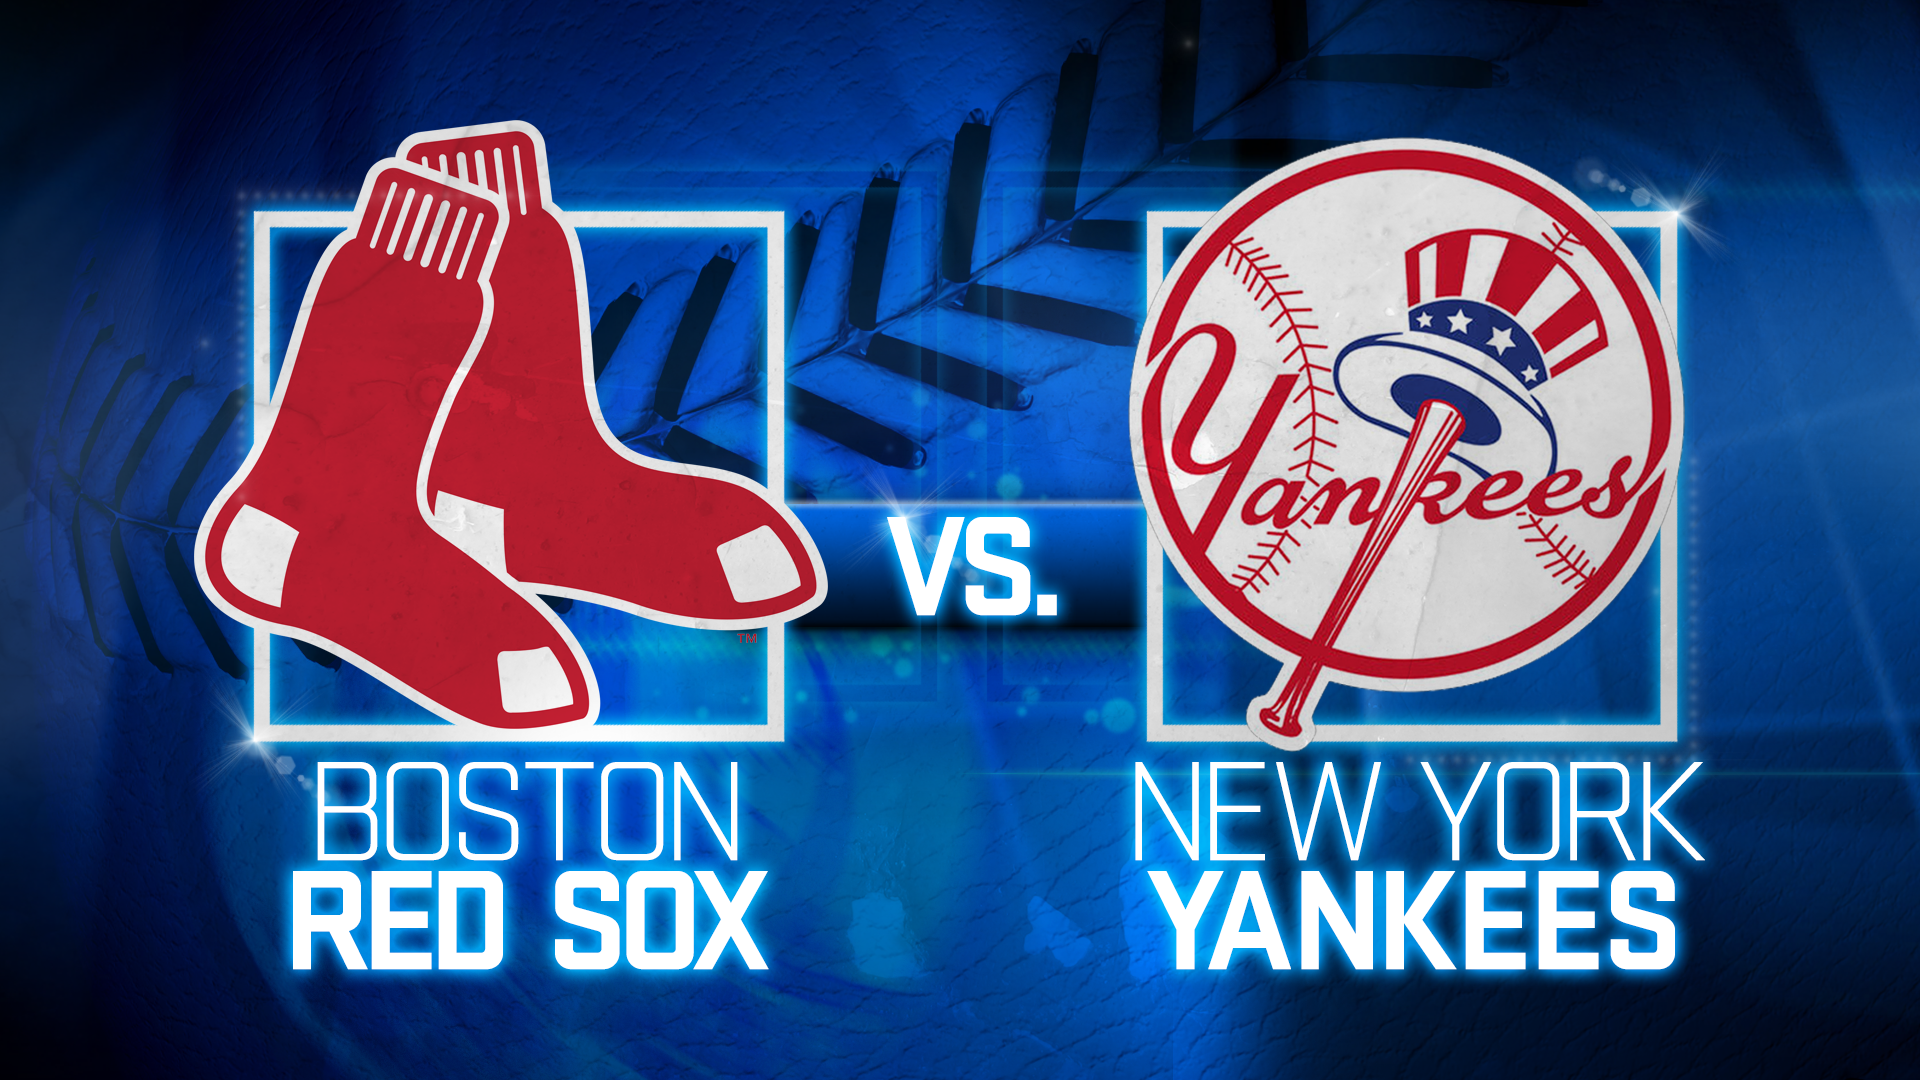 Gleyber Torres New York Yankees beat Boston Red Sox in Game 2 Saturday